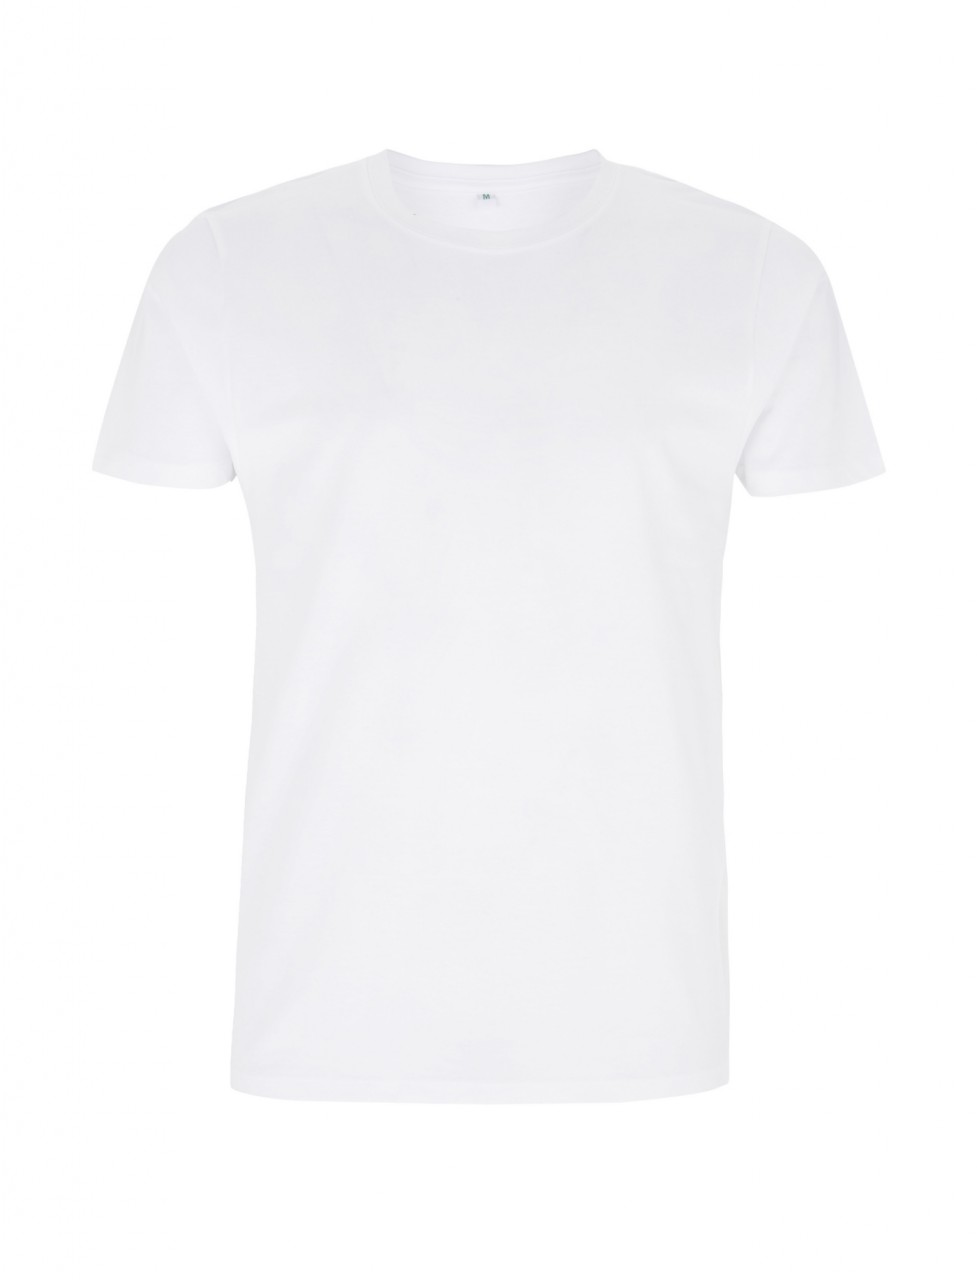 Earth Positive Unisex T-Shirt white - Continental Clothing - HERREN | T-Shirts | Unifarben & Streifen